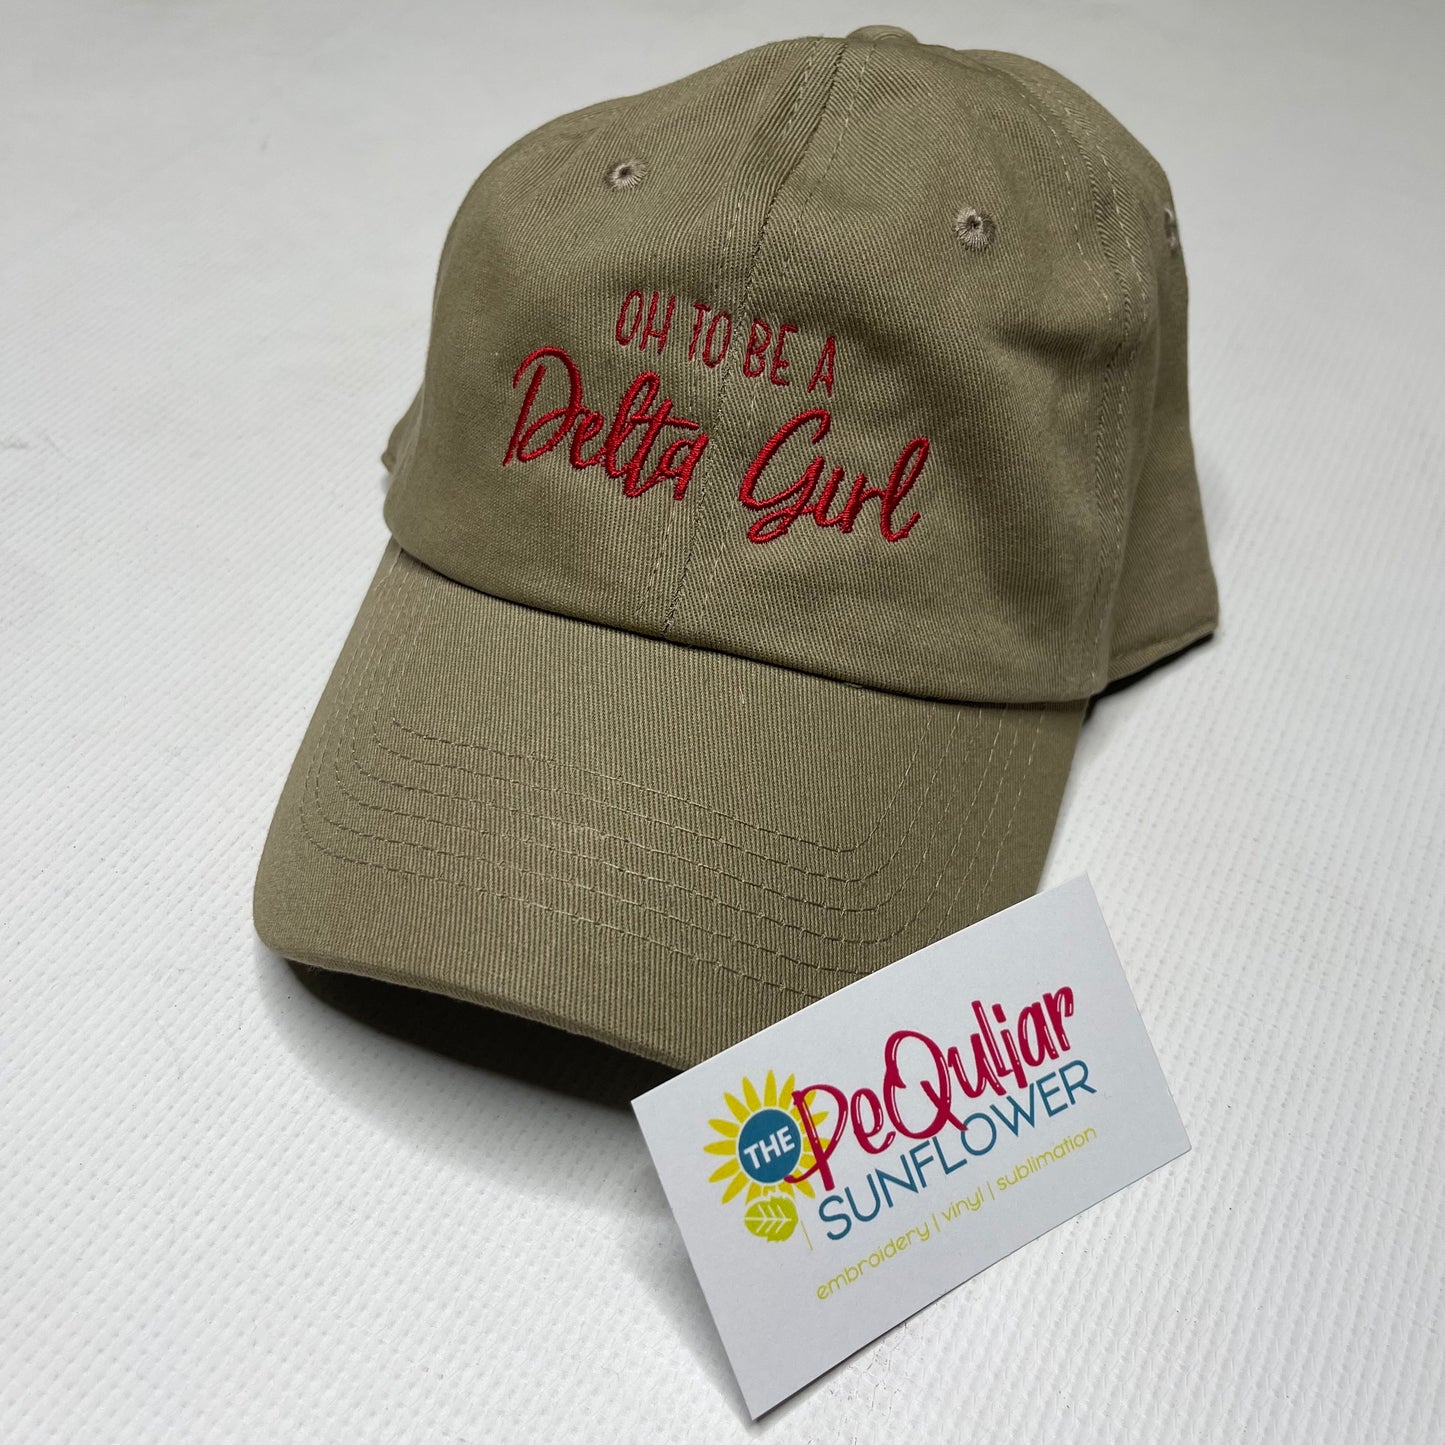 Delta Girl hat